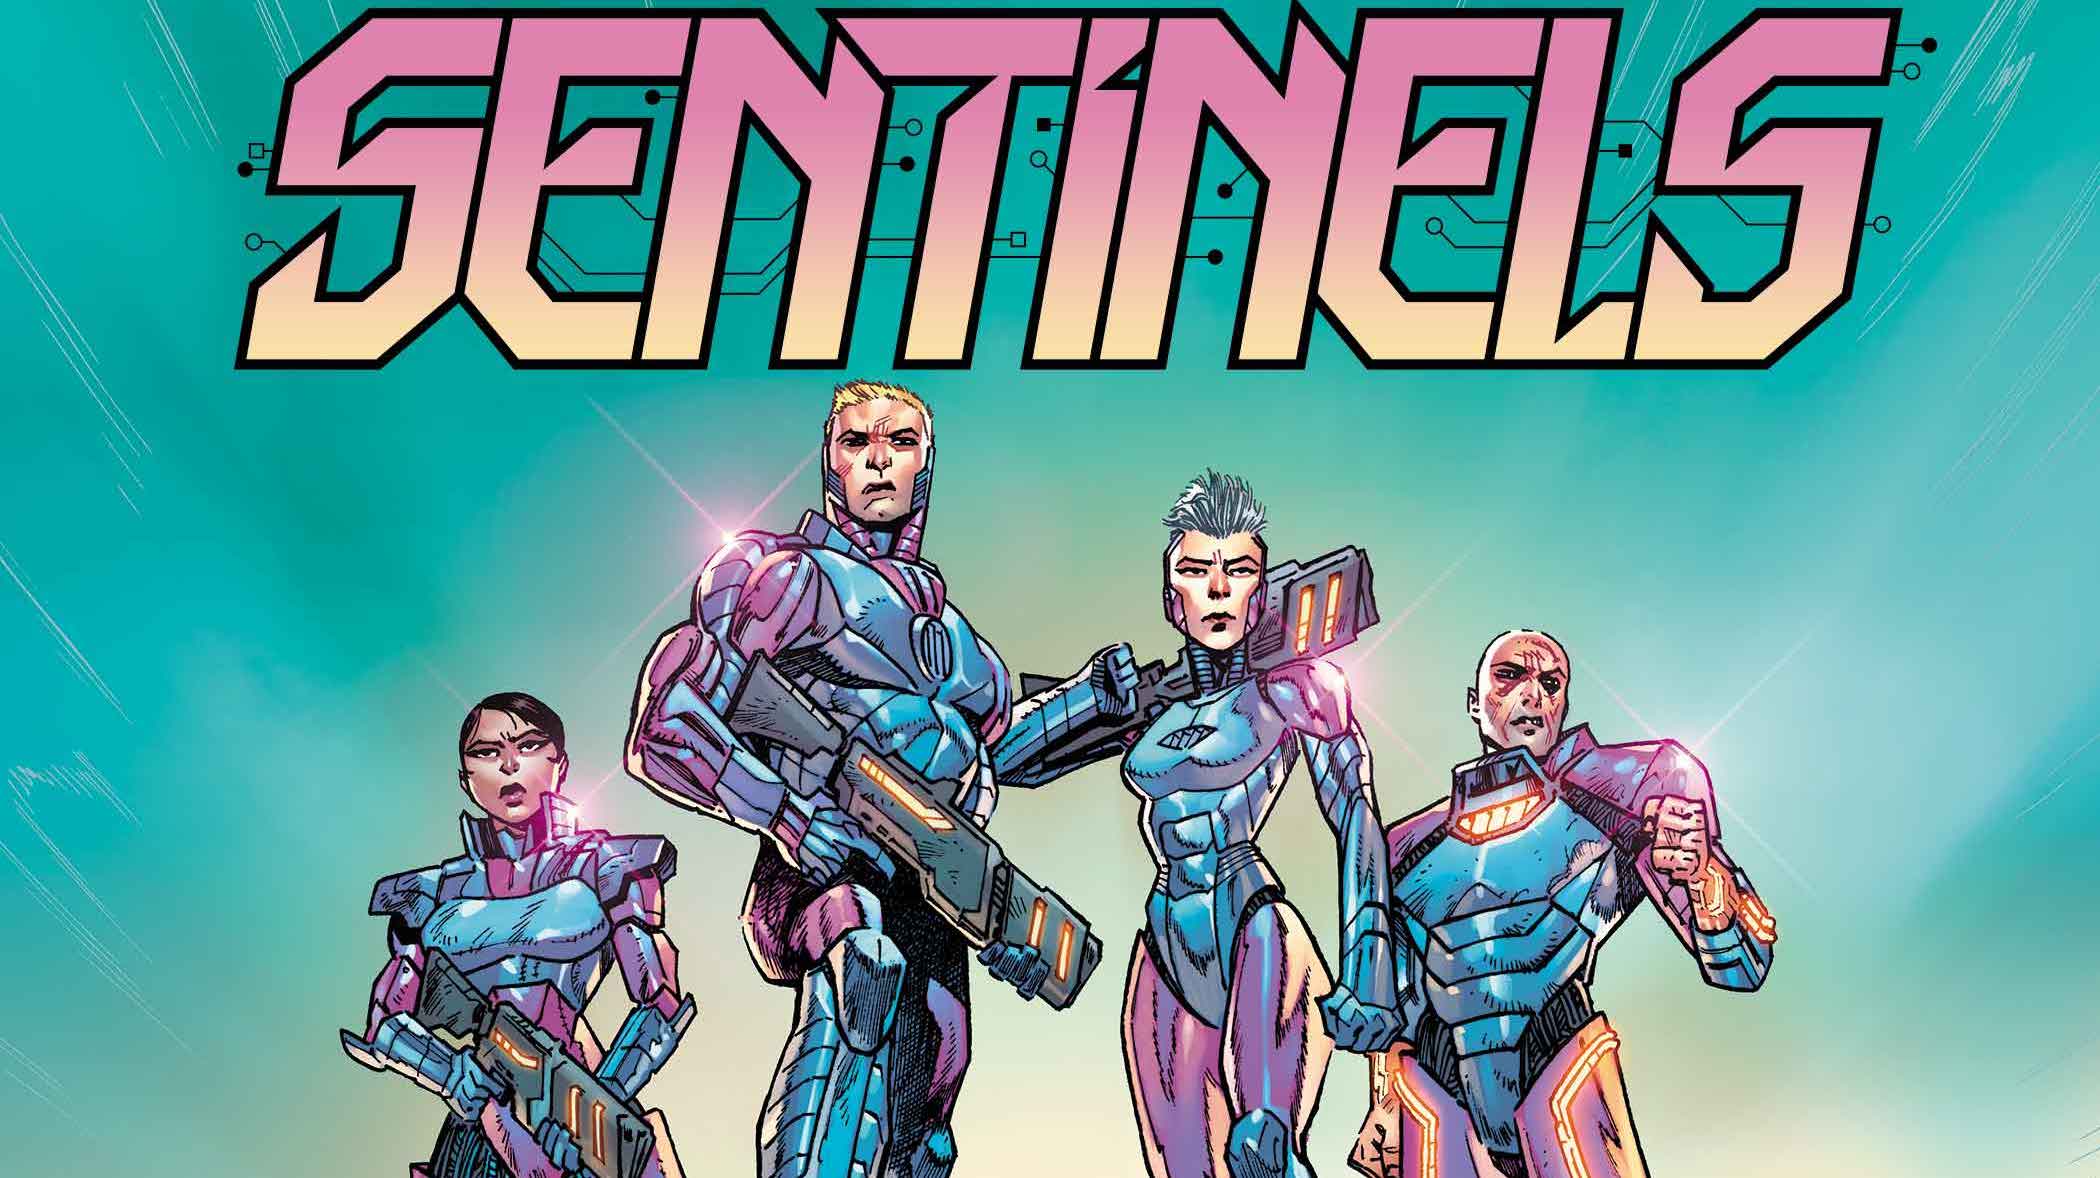 Cyborg soldiers make up new X-Men series 'Sentinels'